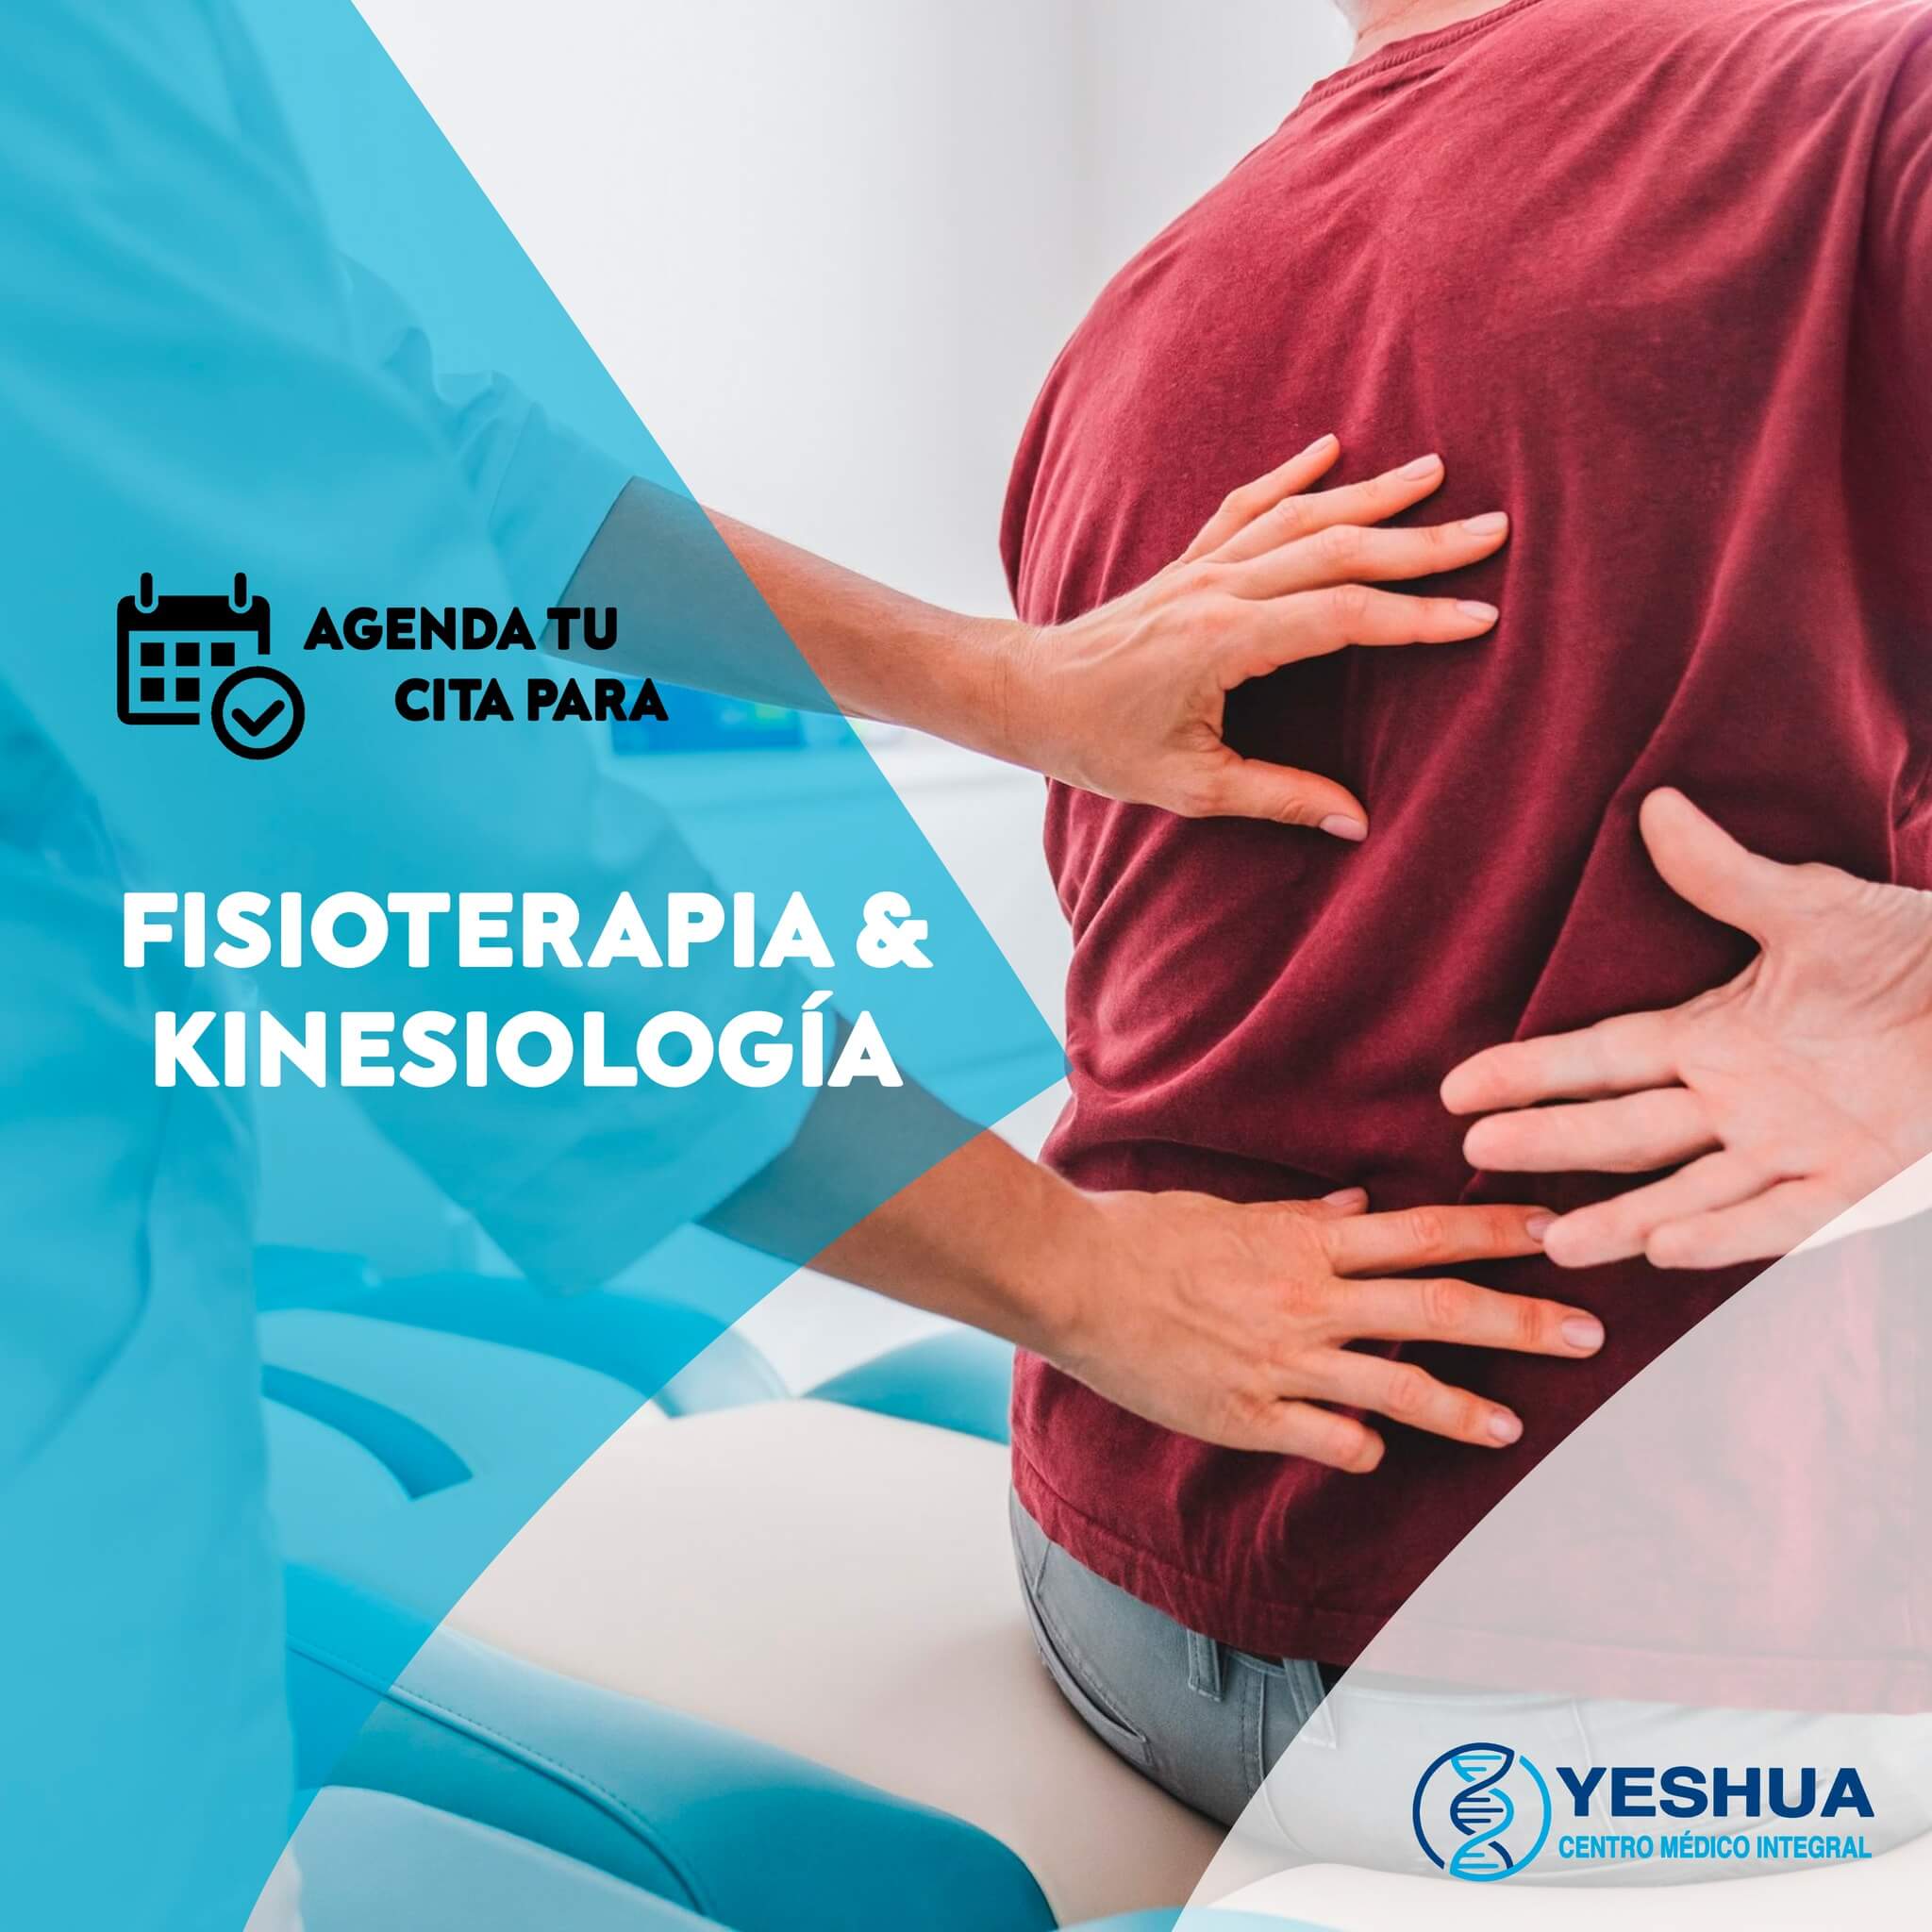 Fisioterapia y Kinesiologia - Centro Medico Integral Yeshua Cochabamba